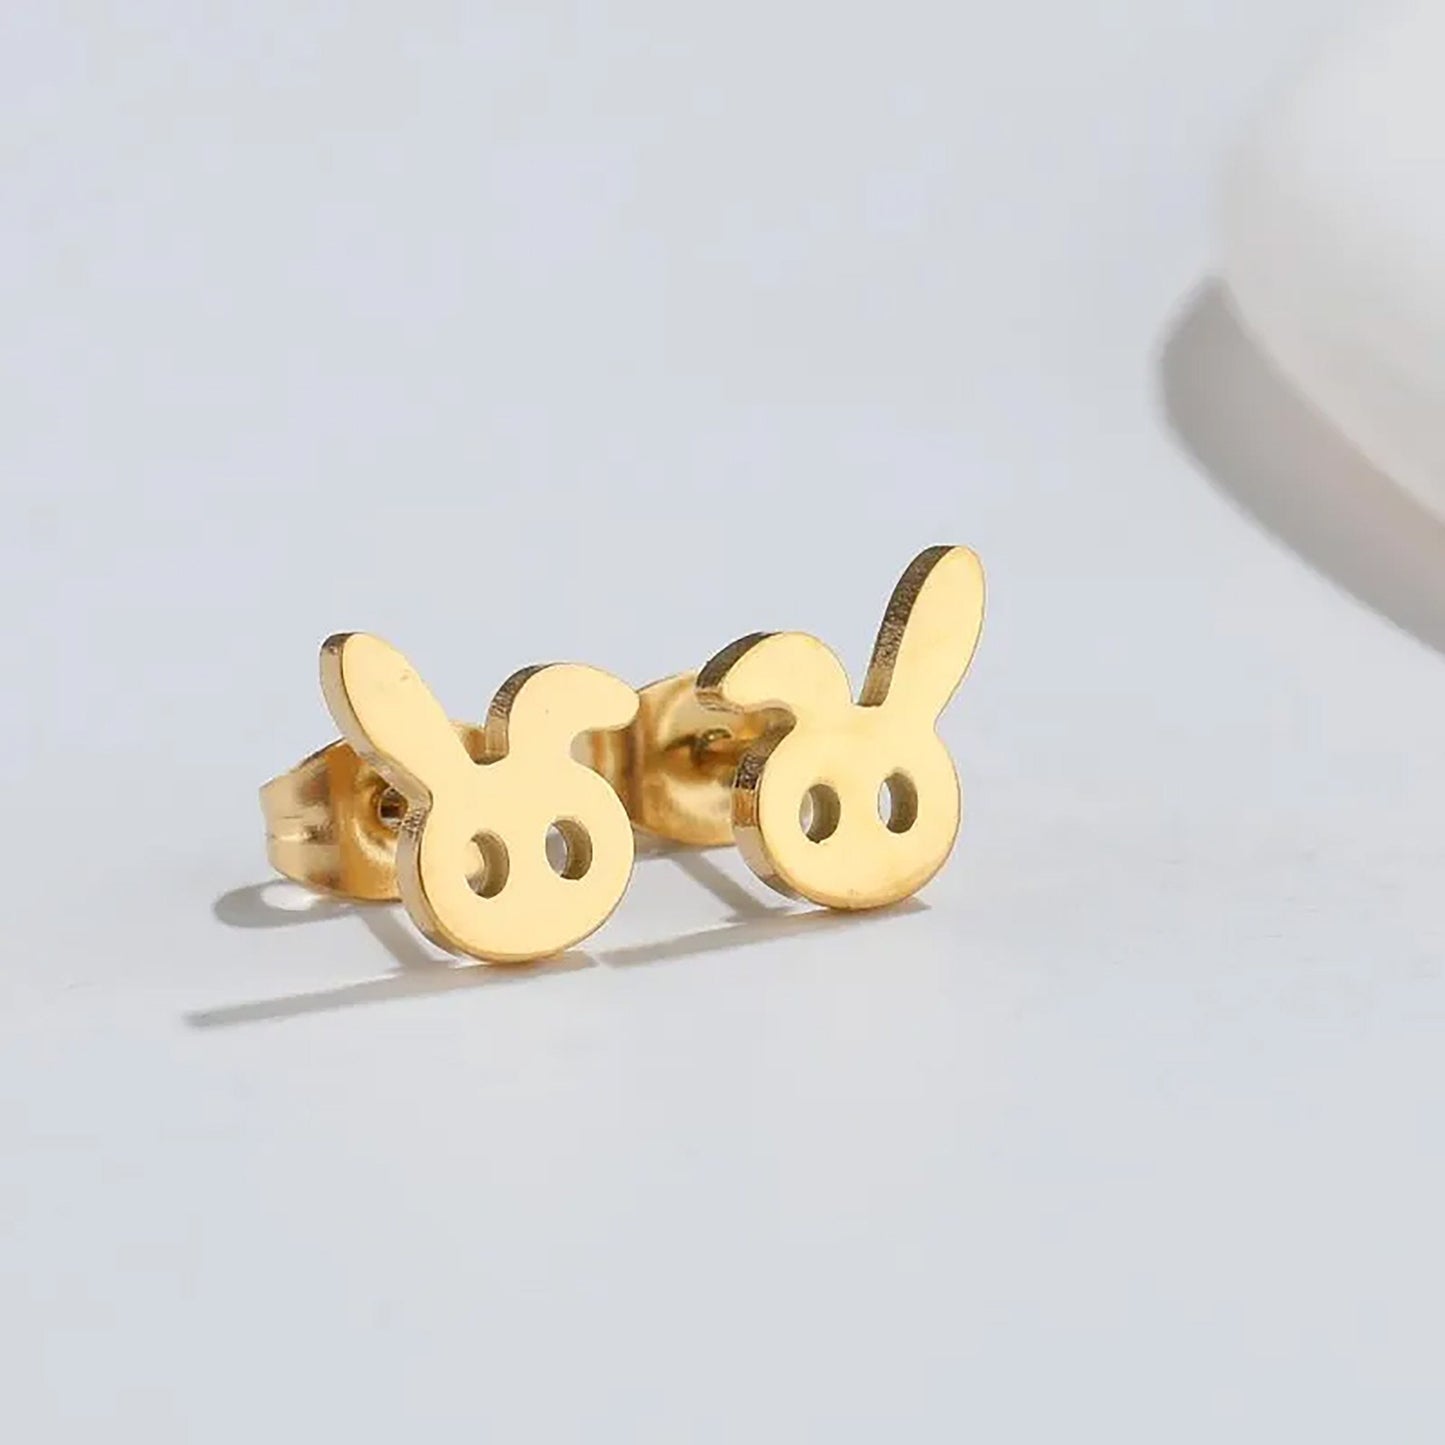 Titanium Bunny Push Back Stud Earrings, Non Tarnish, Implant Grade Titanium Waterproof Earrings, Vintage Style Earrings, Minimalist